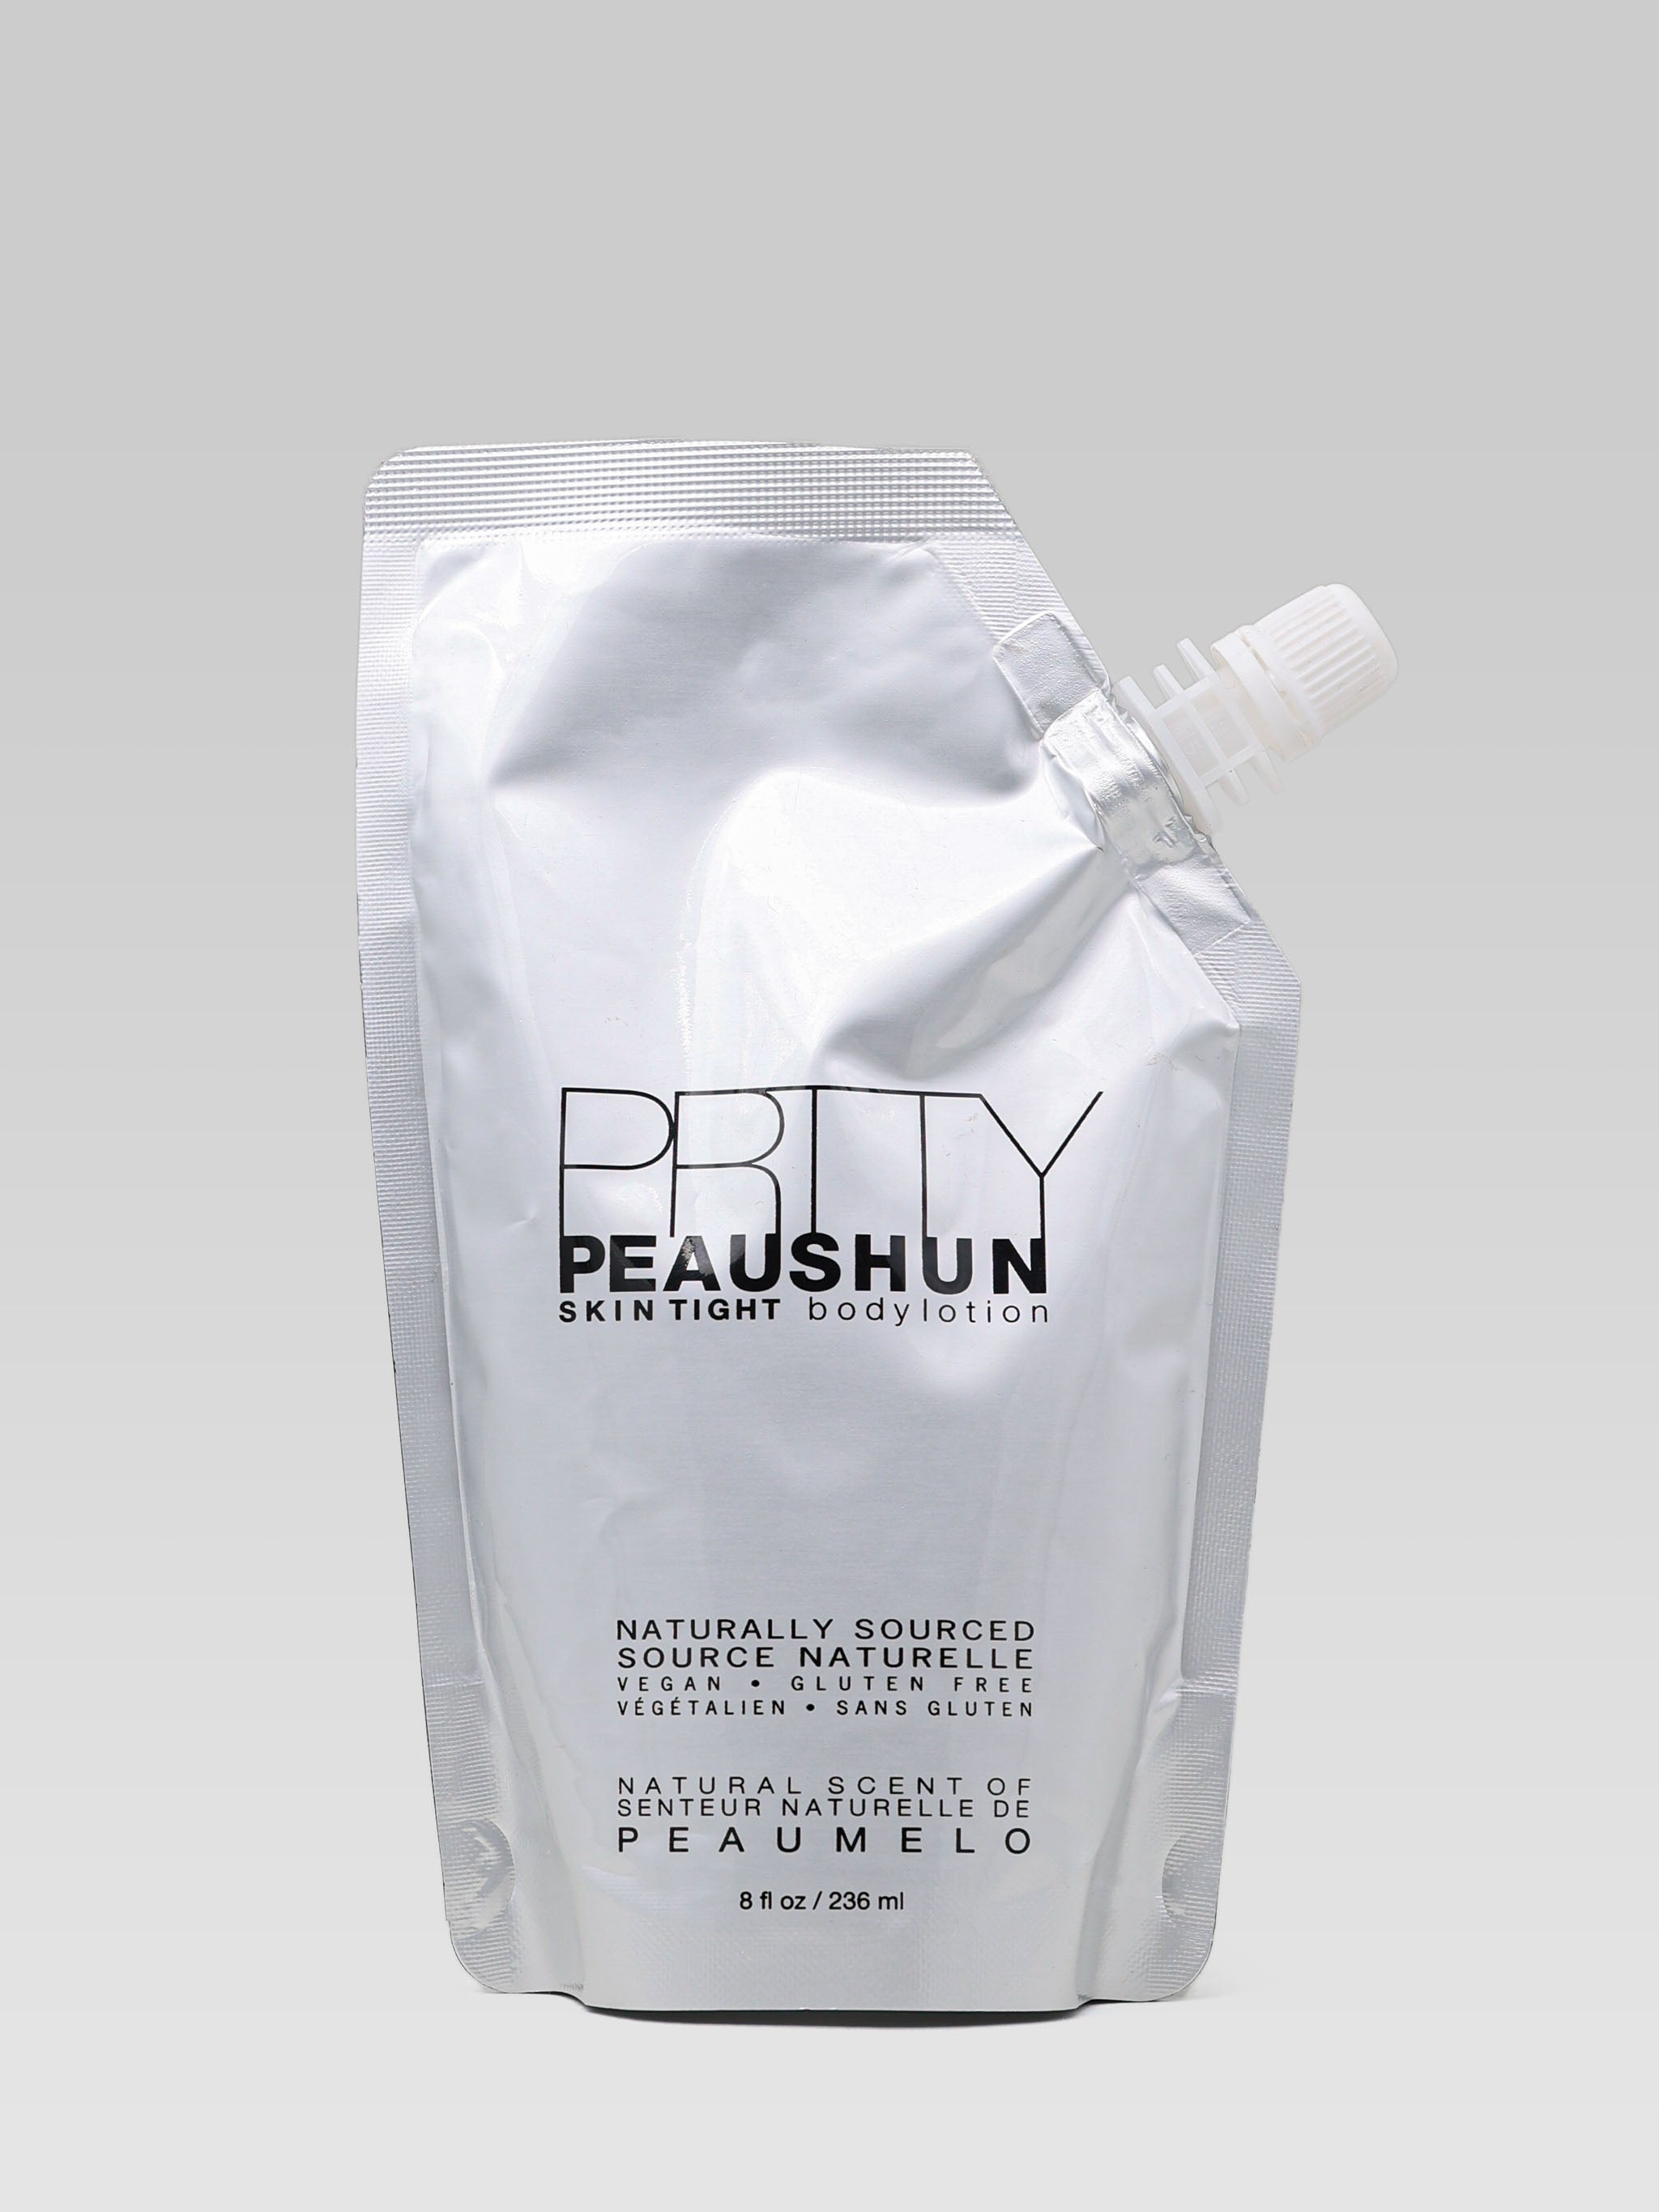 PRTTY PEAUSHUN Skin Tight Body Lotion deep dark product shot